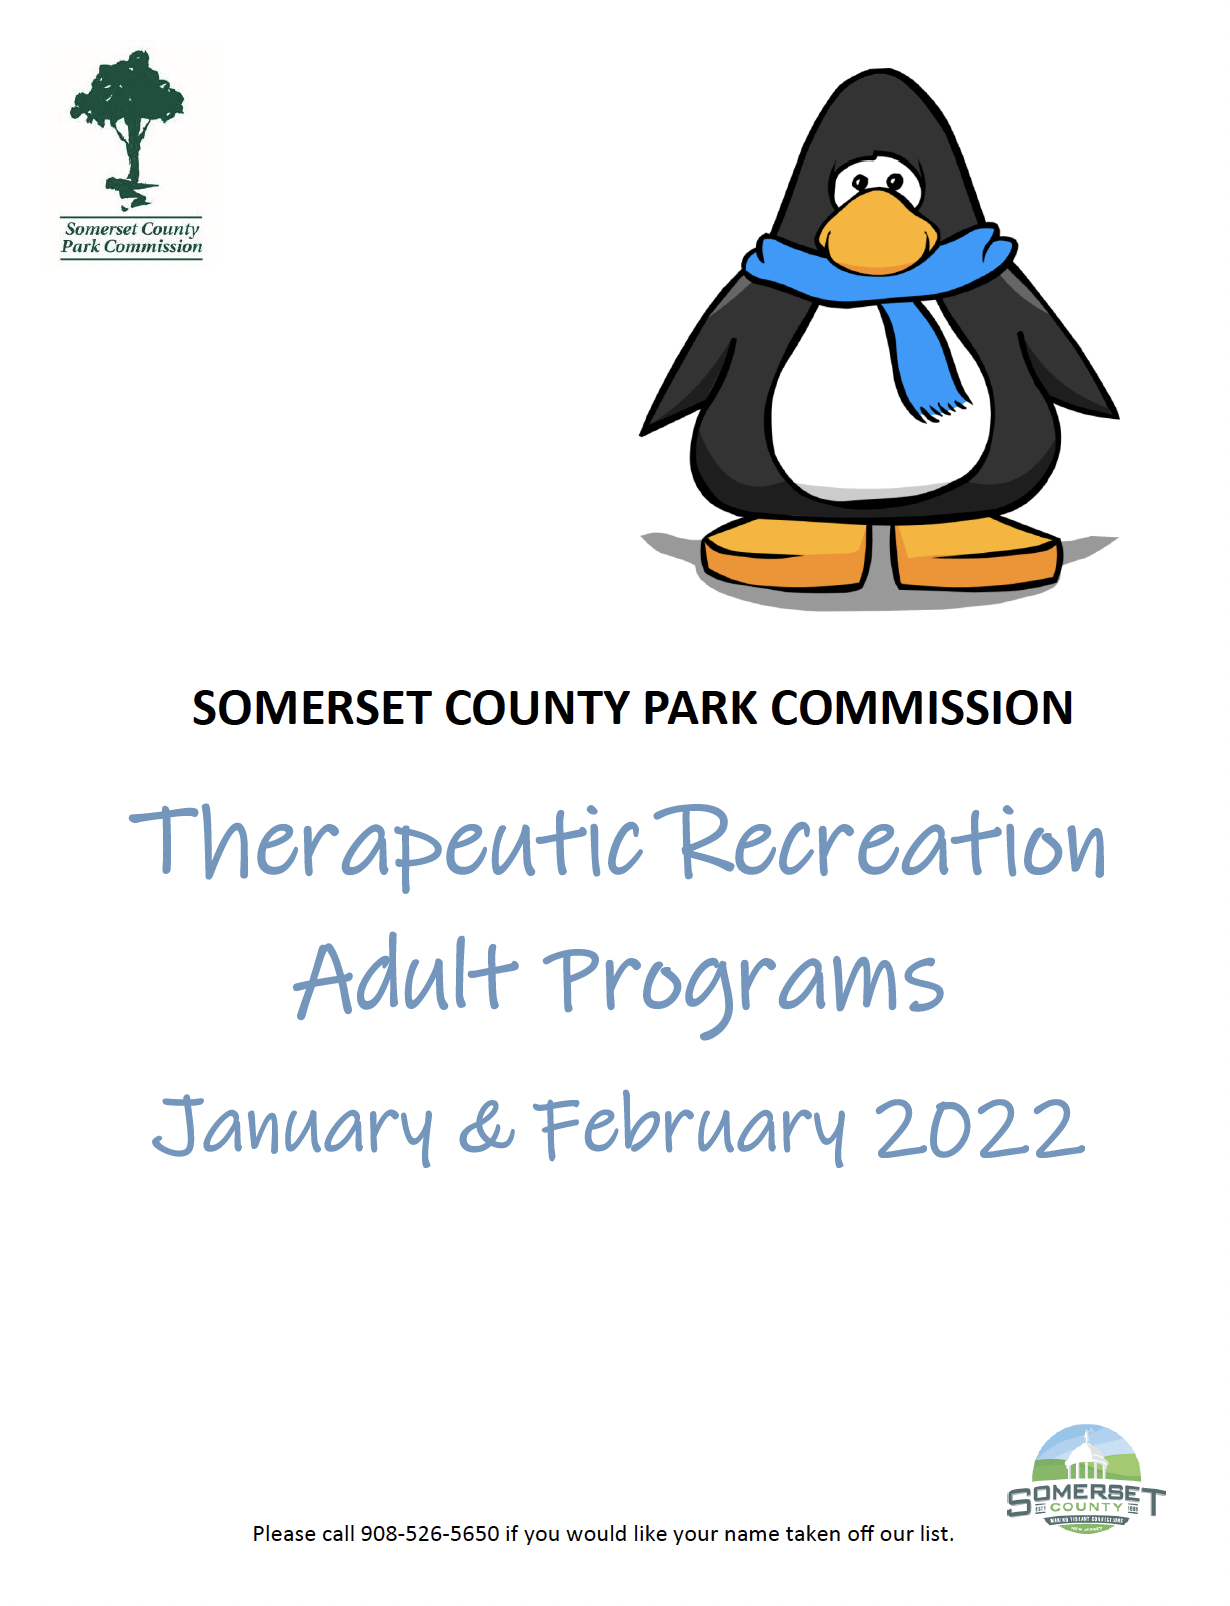 Therapeutic Recreation Programs Flyer